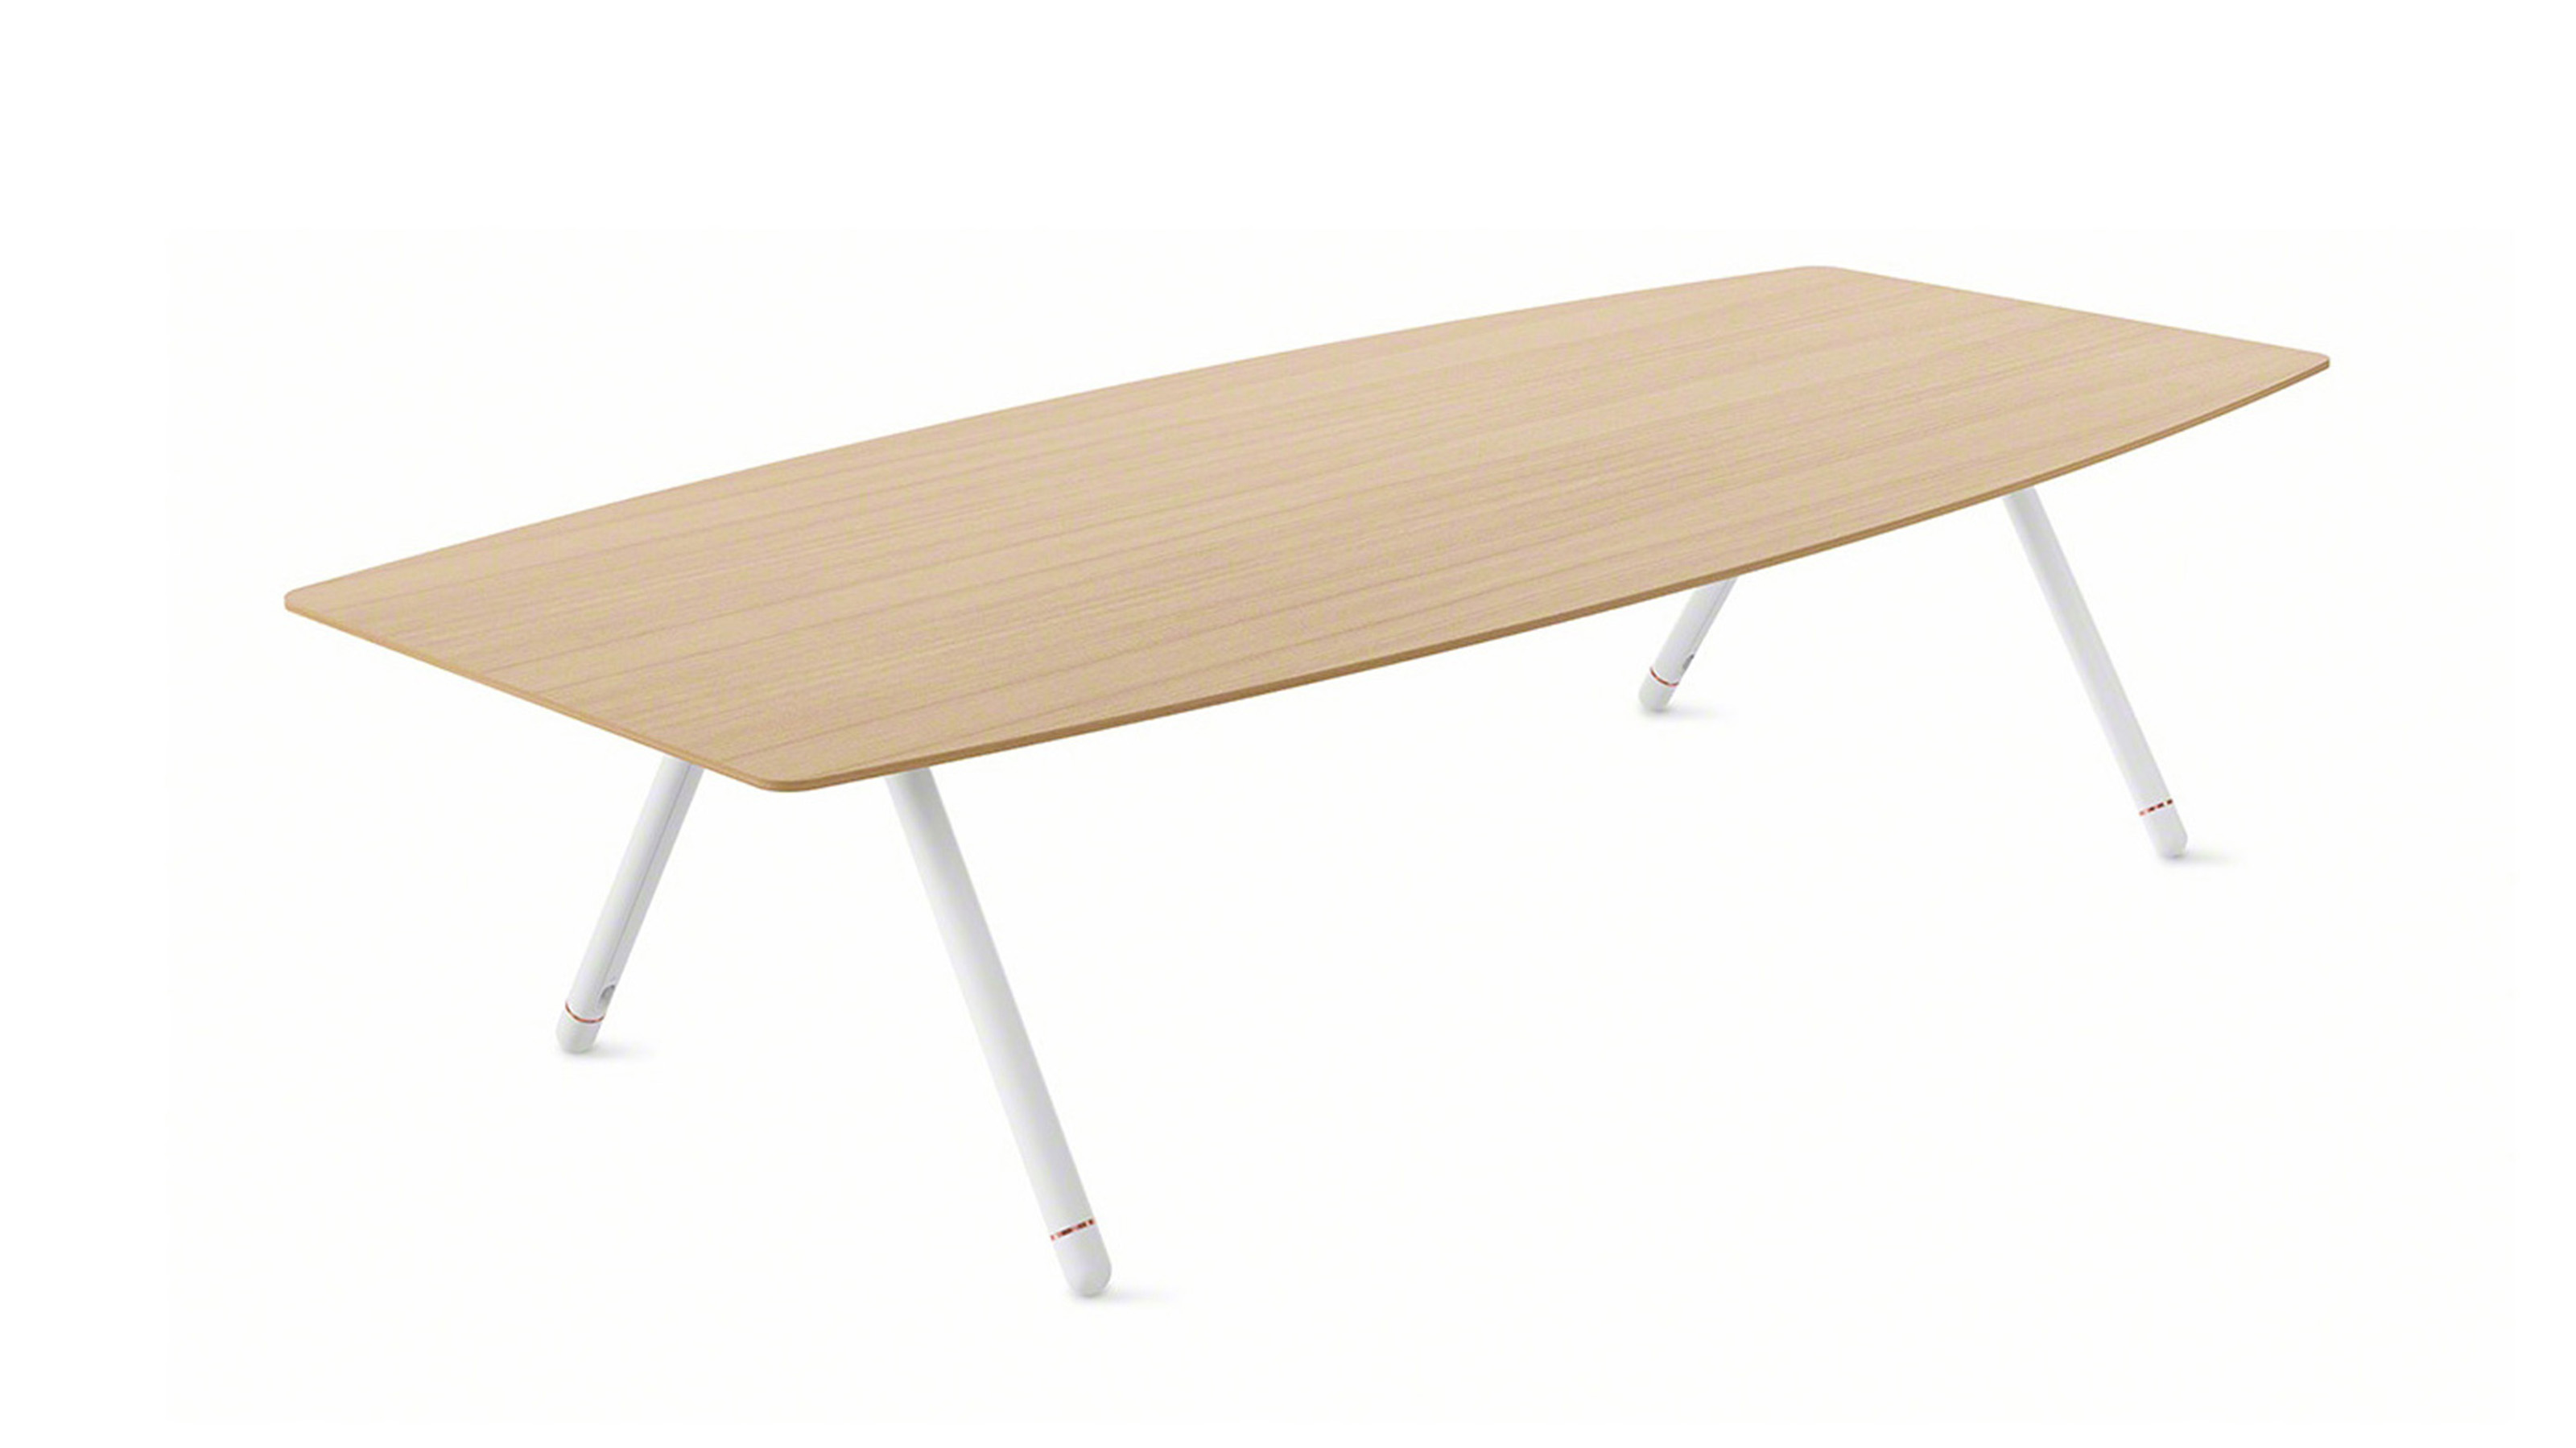 Potrero415 Light Table with Wood Leg